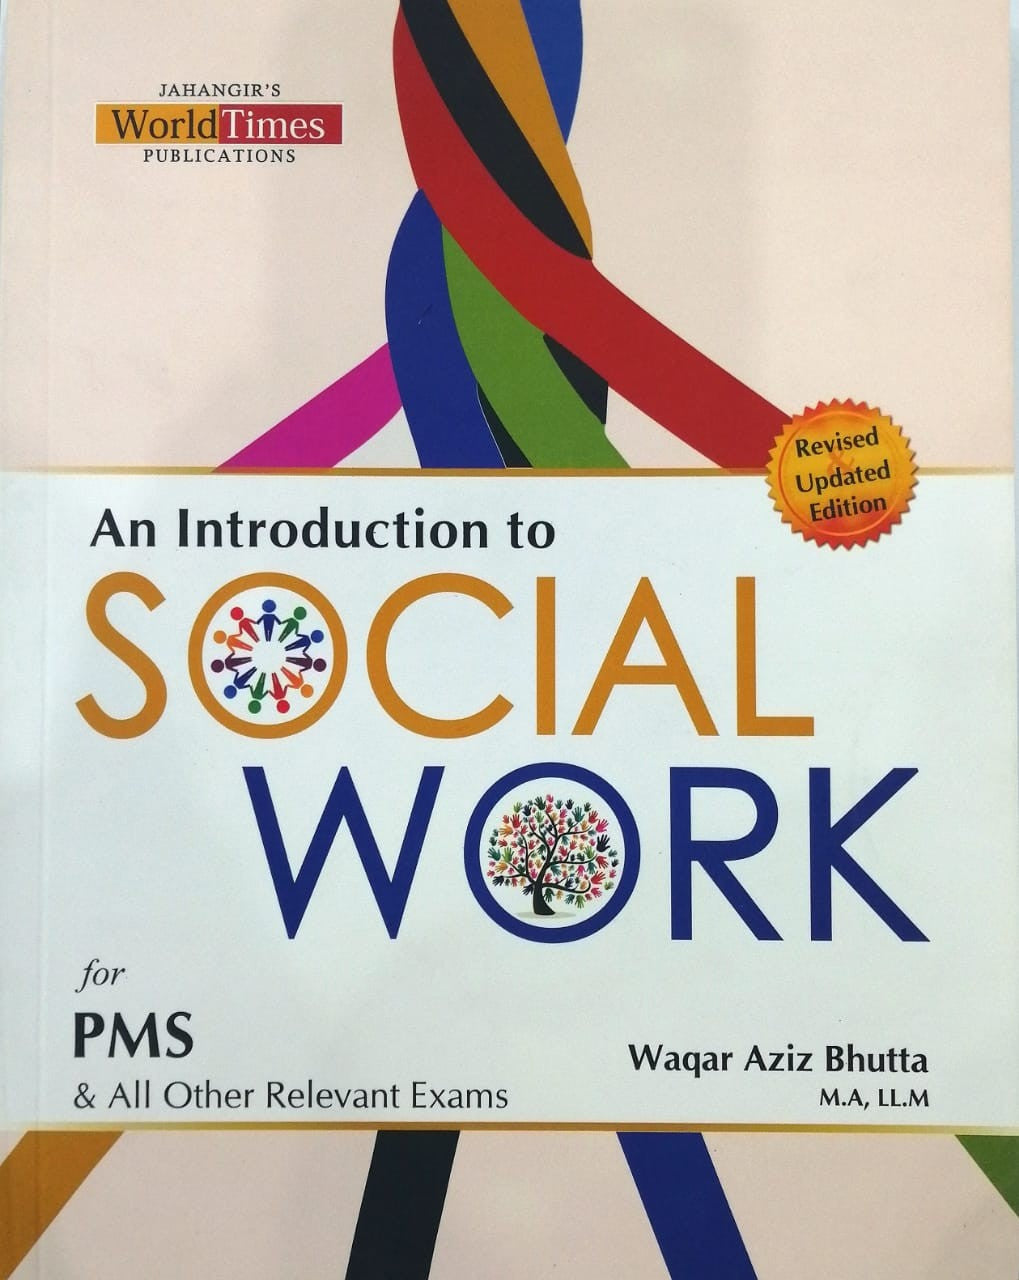 An Introduction To Social Work For PMS By Waqar Aziz Bhutta